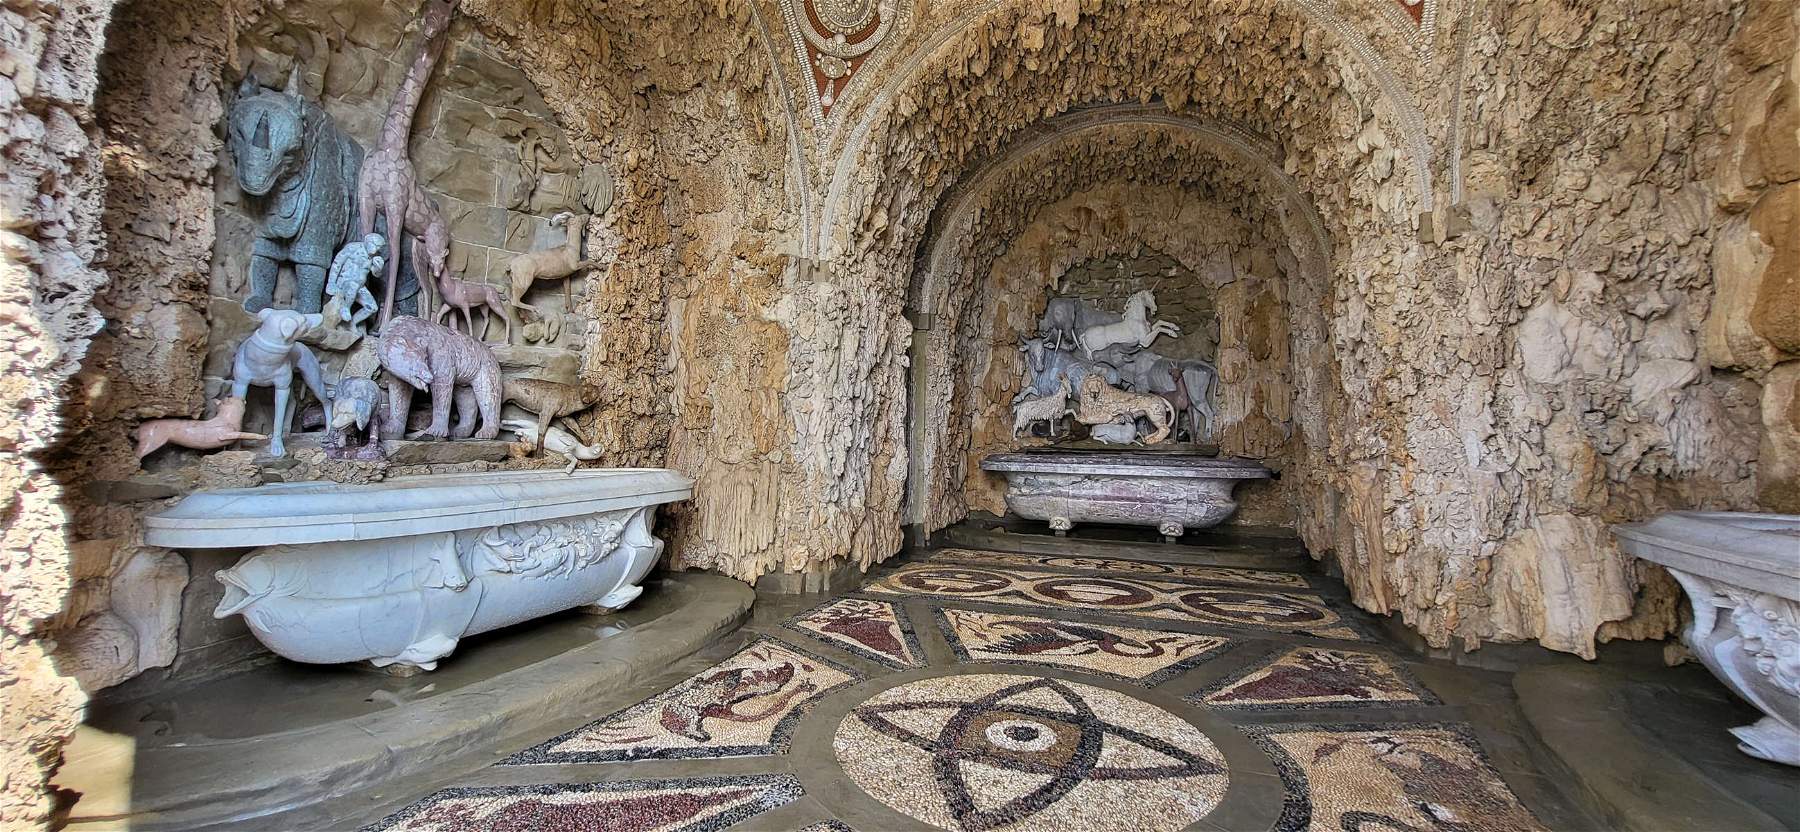 Florence, fin de la restauration de la spectaculaire Grotta degli Animali (grotte des animaux) de la Villa Medicea di Castello.